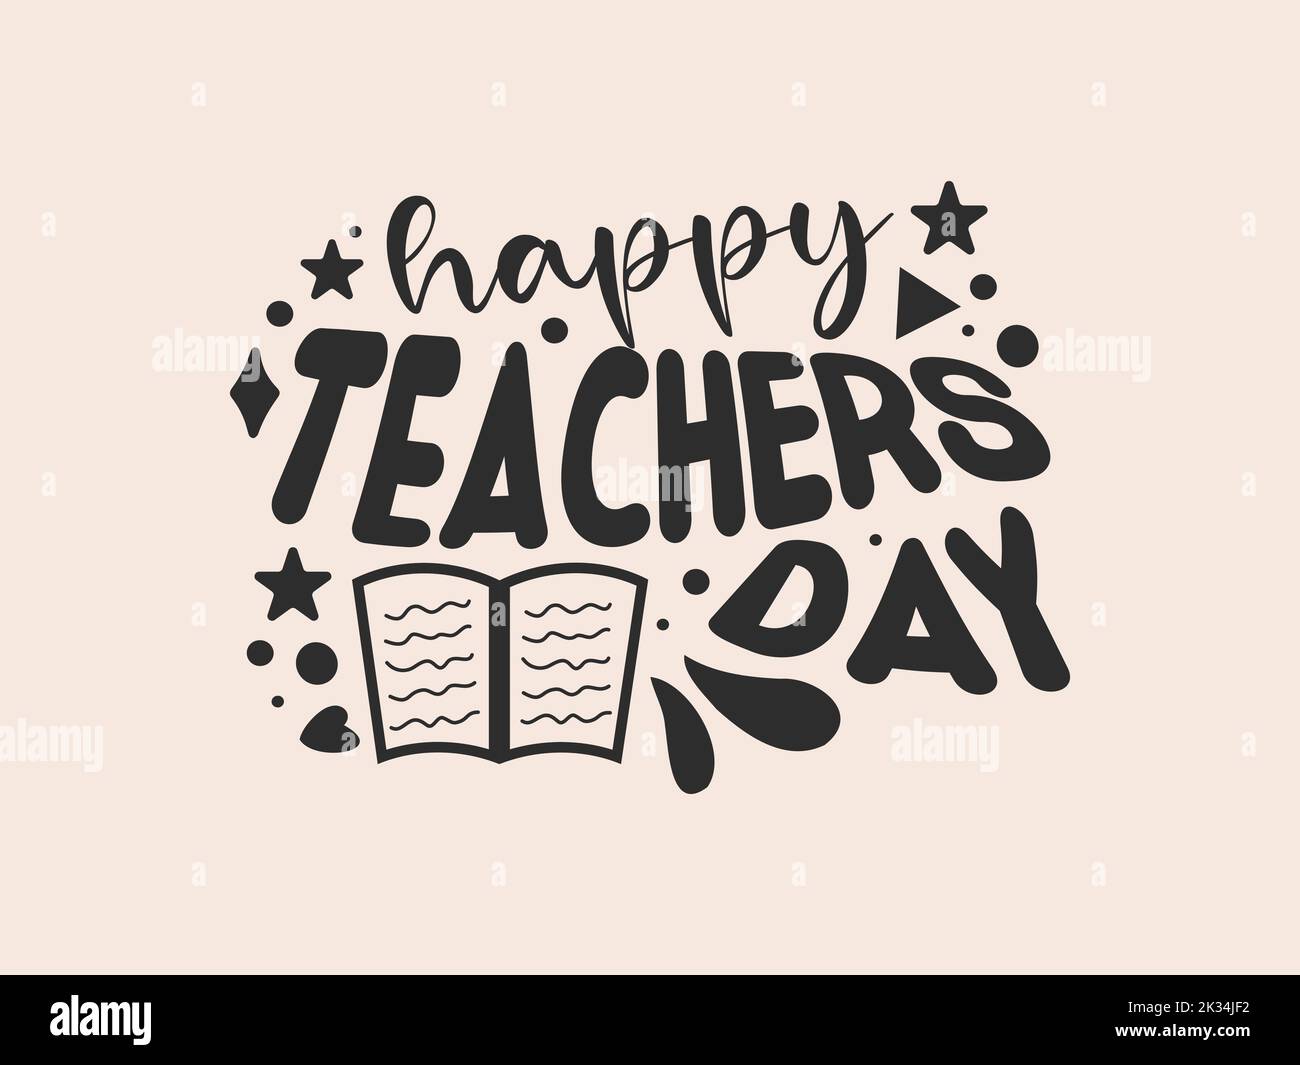 Happy teachers day vector Calligraphy design with creative doodle celebration Stock Vector